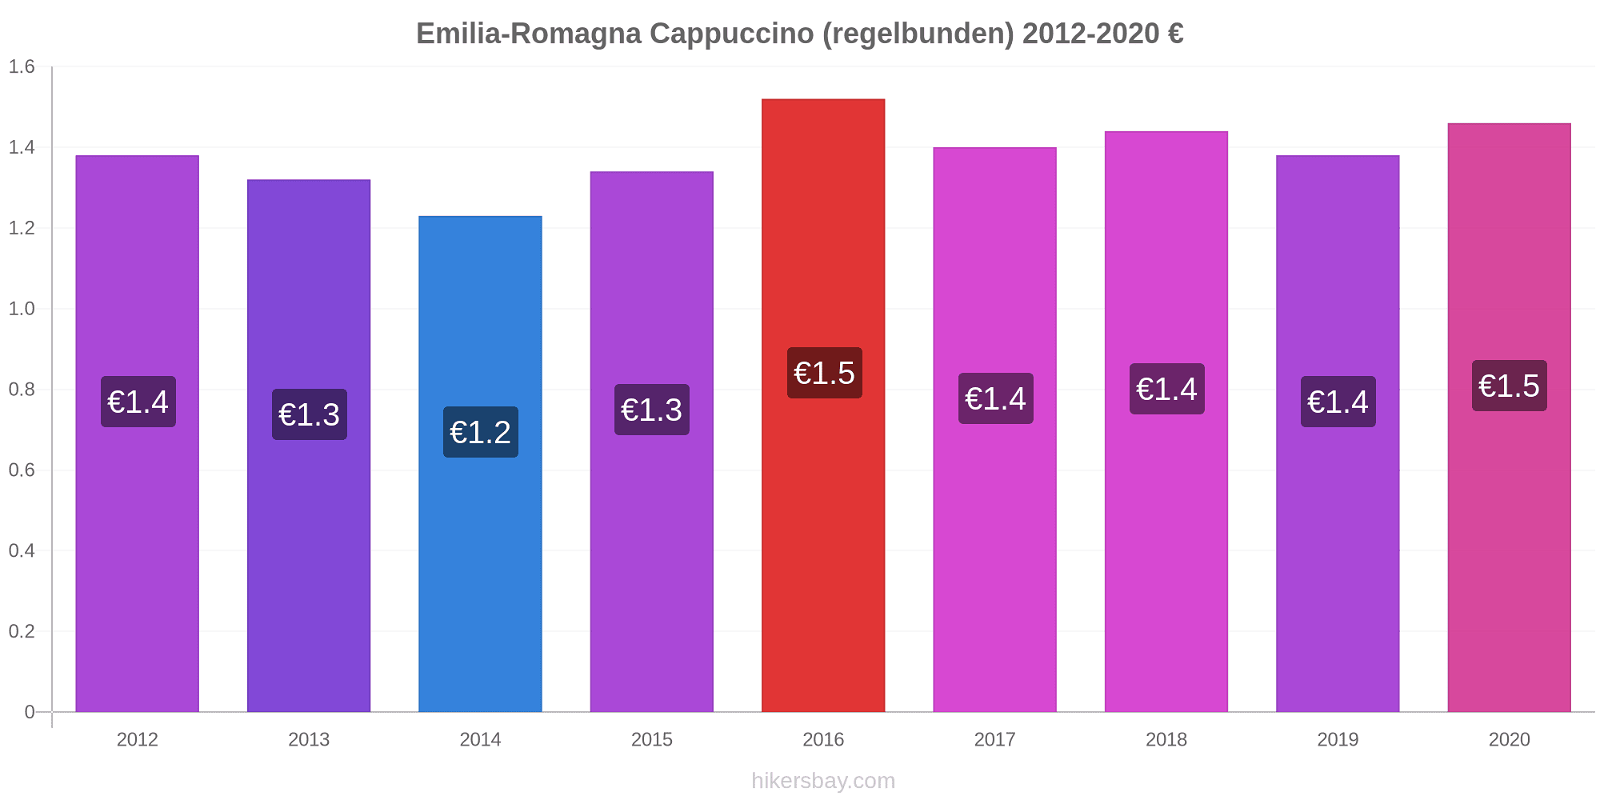 Emilia-Romagna prisförändringar Cappuccino (regelbunden) hikersbay.com